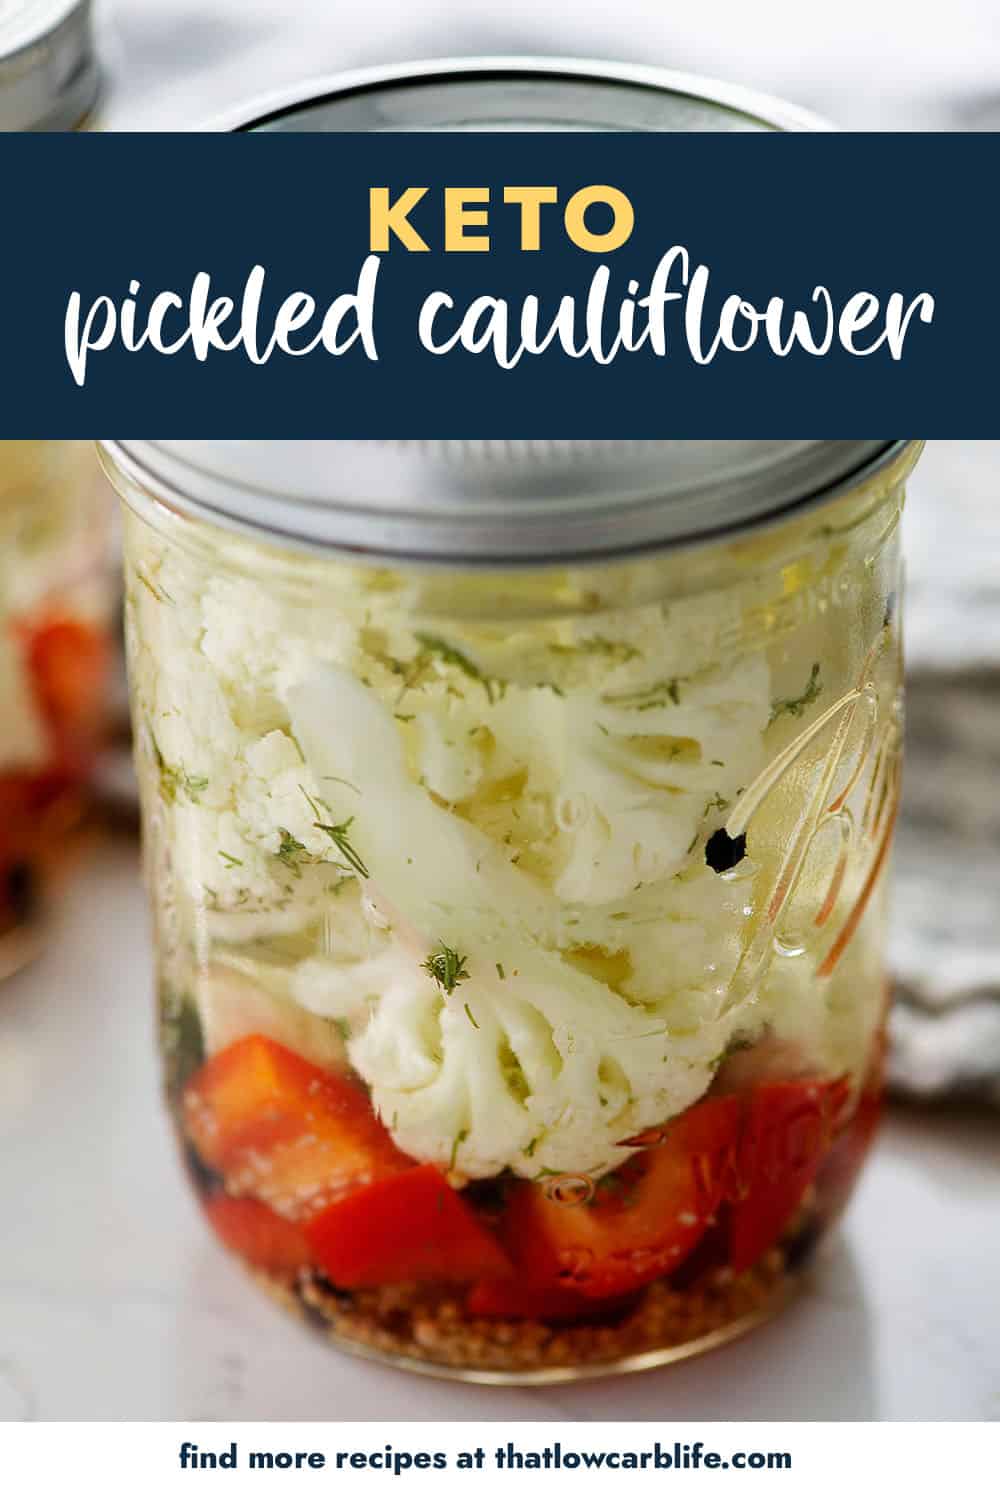 keto pickled cauliflower in jar.